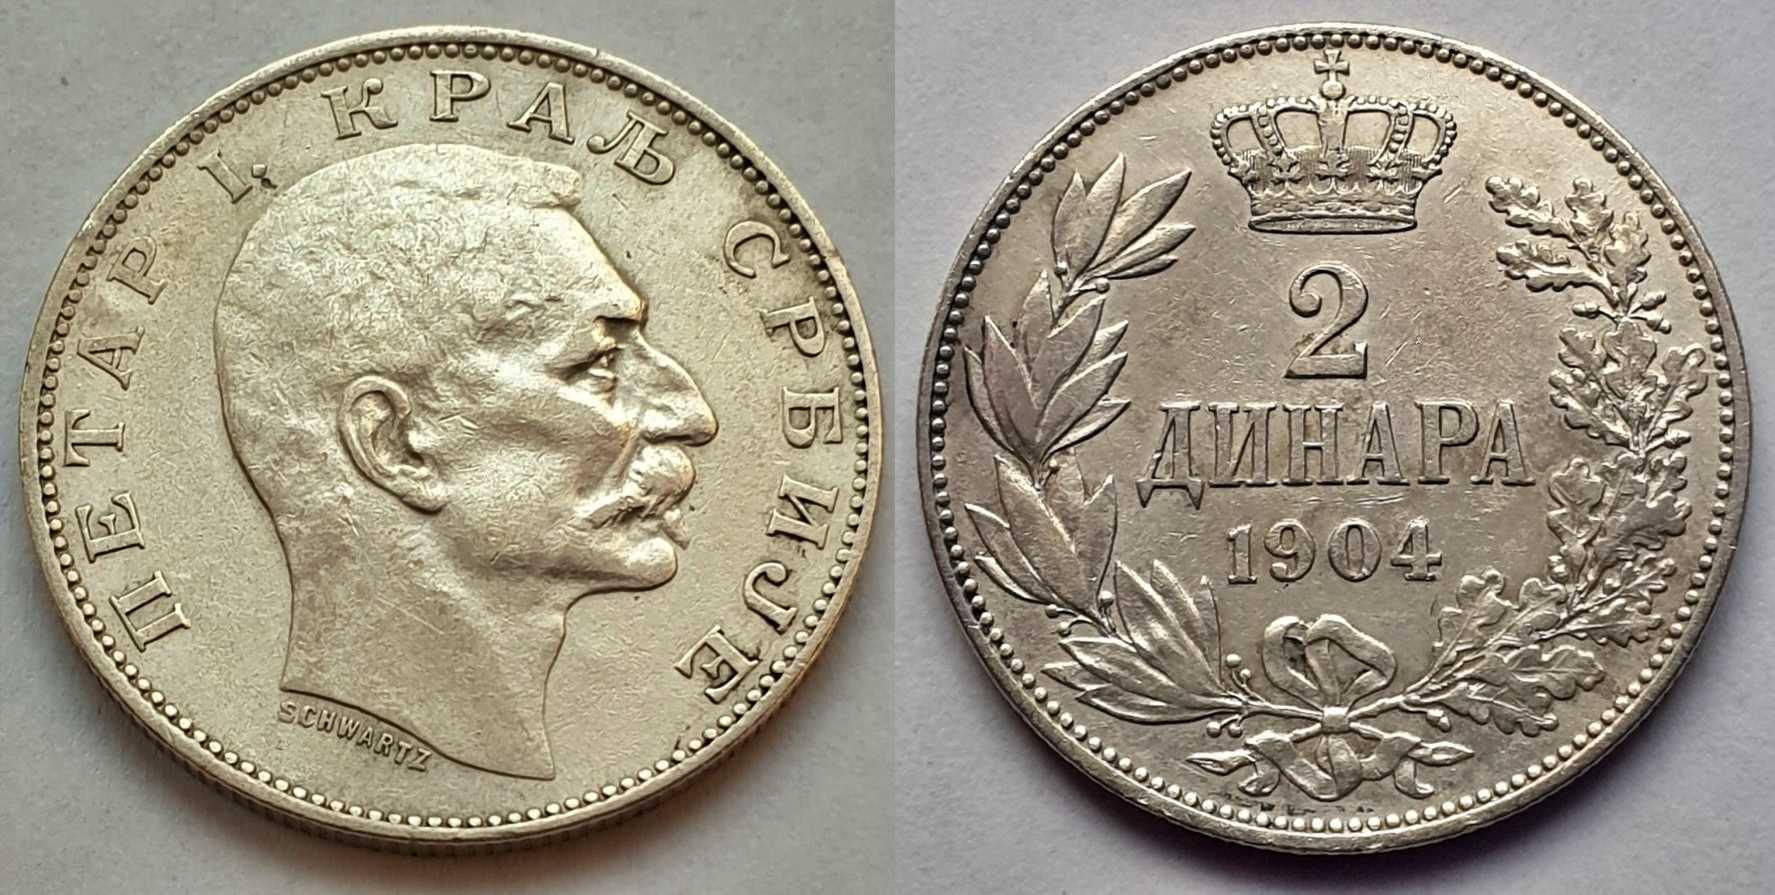 Serbia 2 dinara 1904